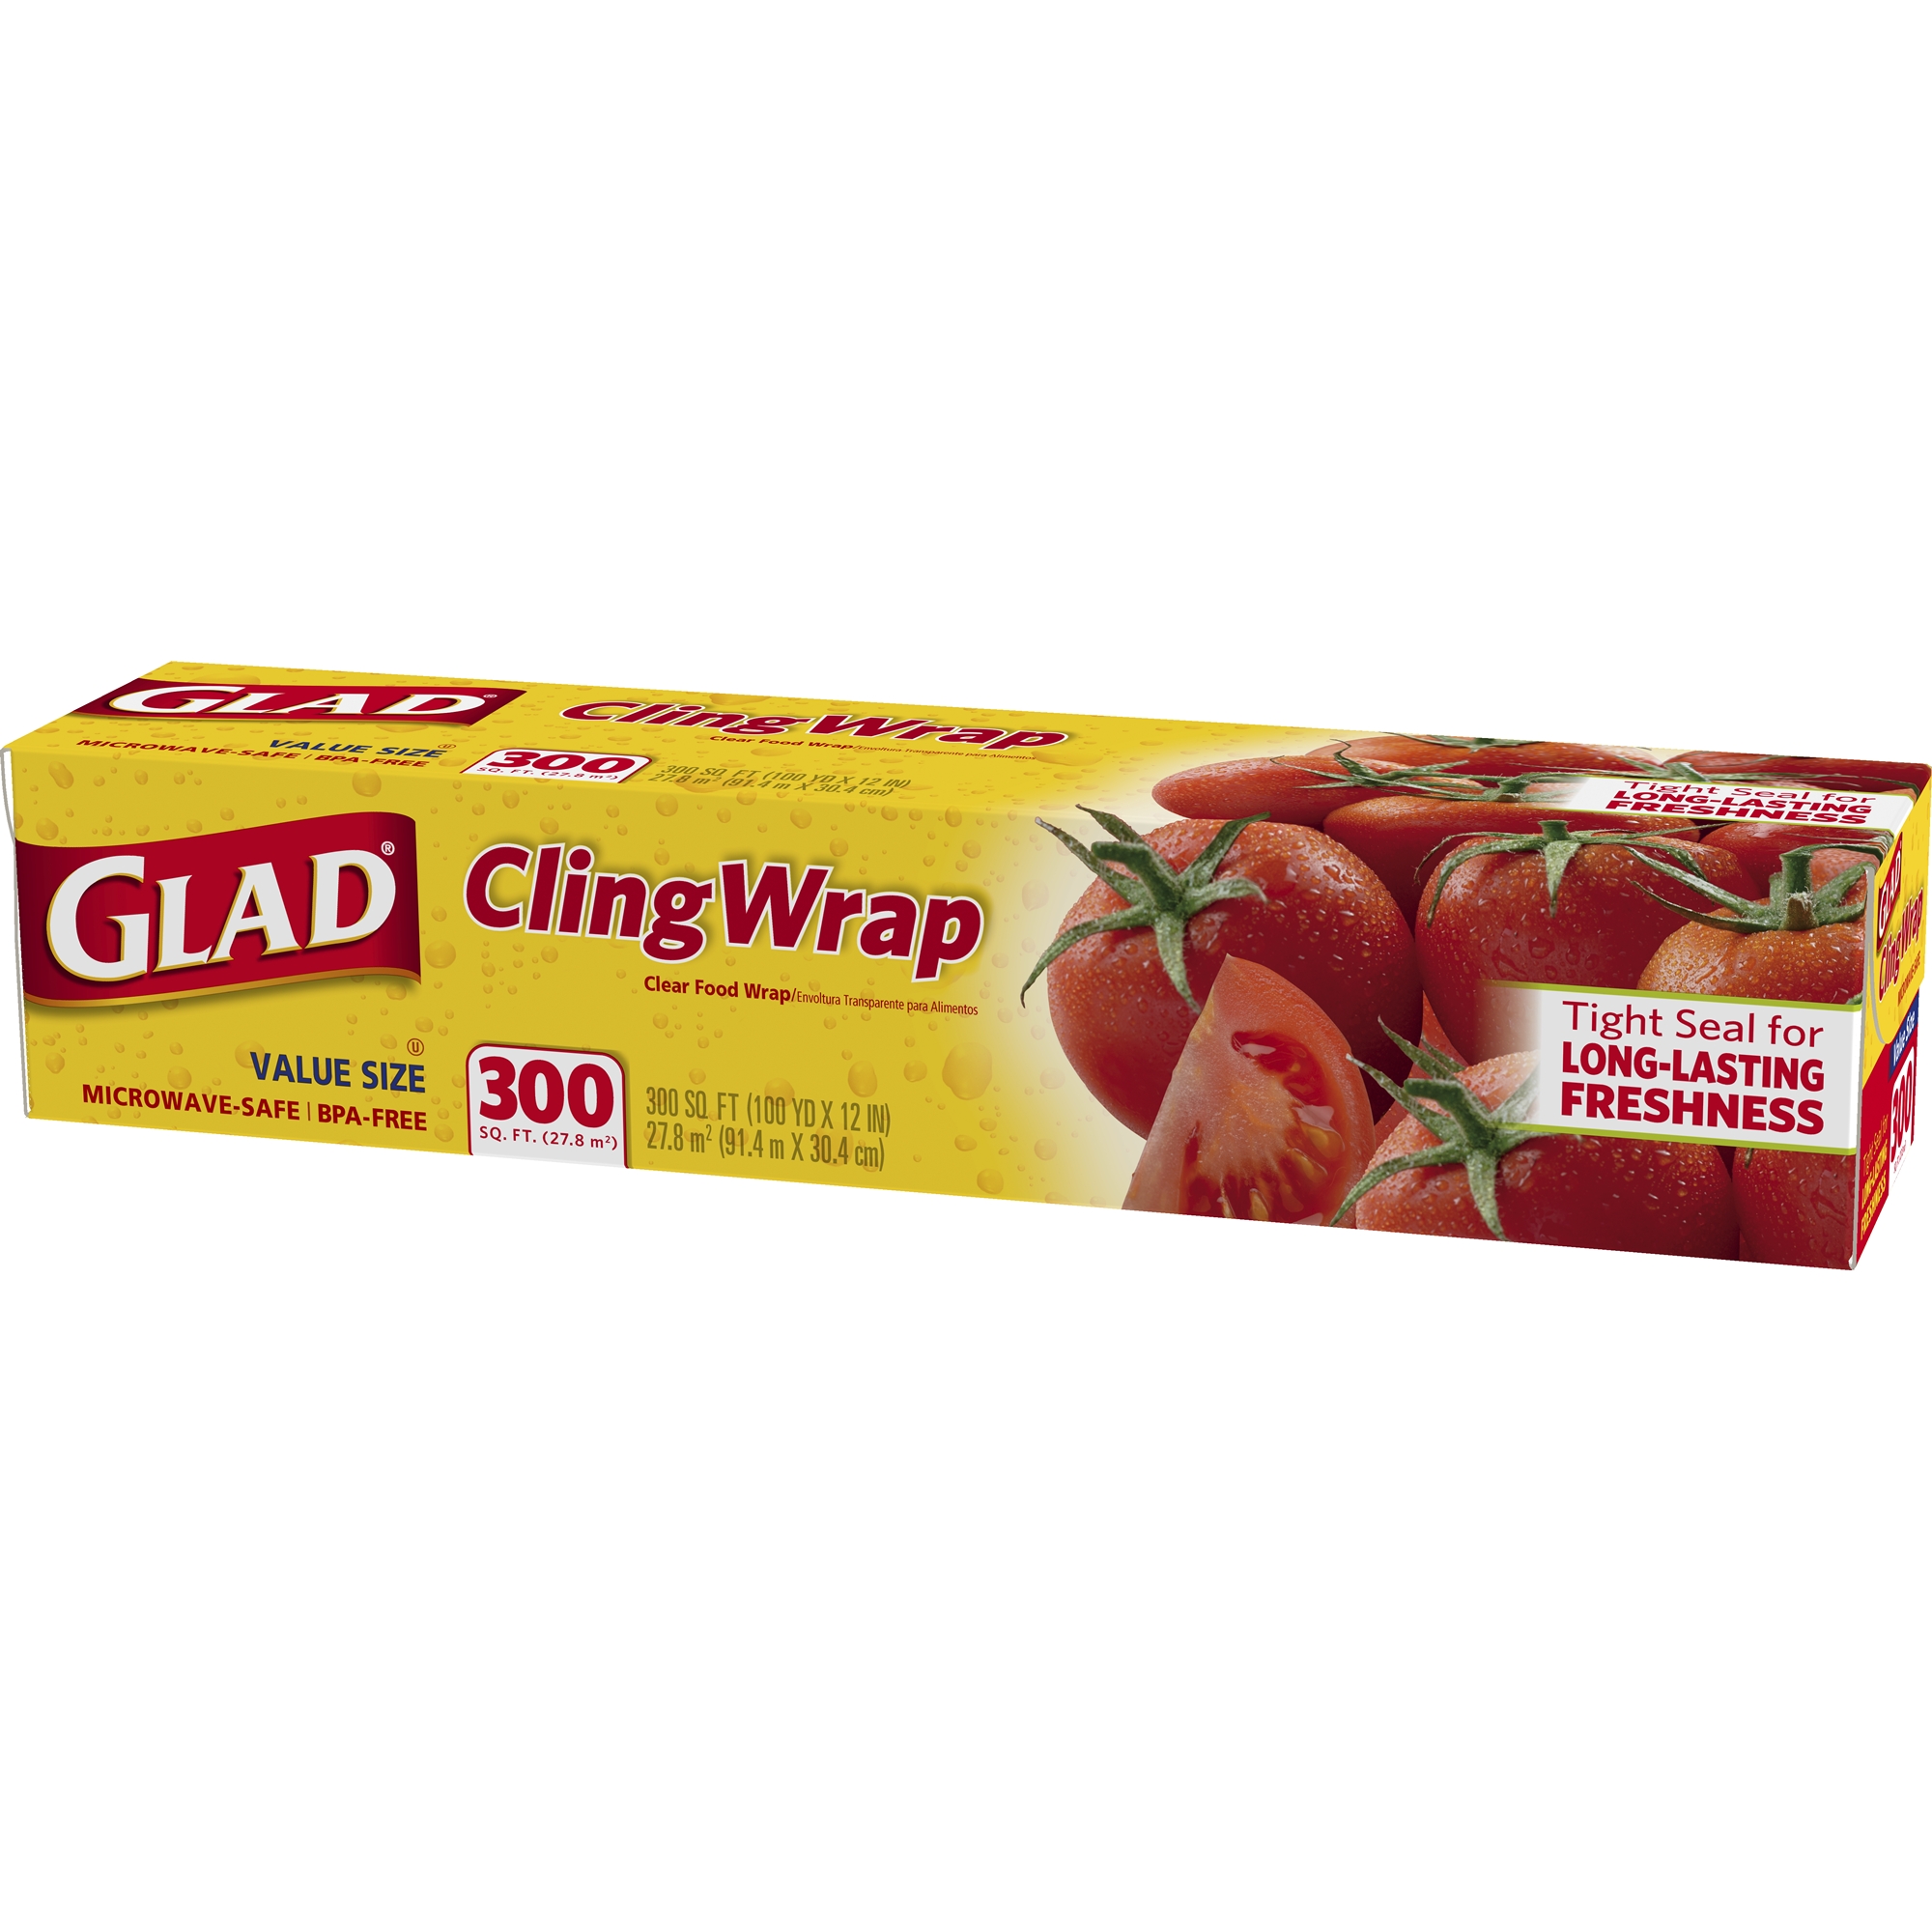 GLAD - CLING WRAP - 300sqft